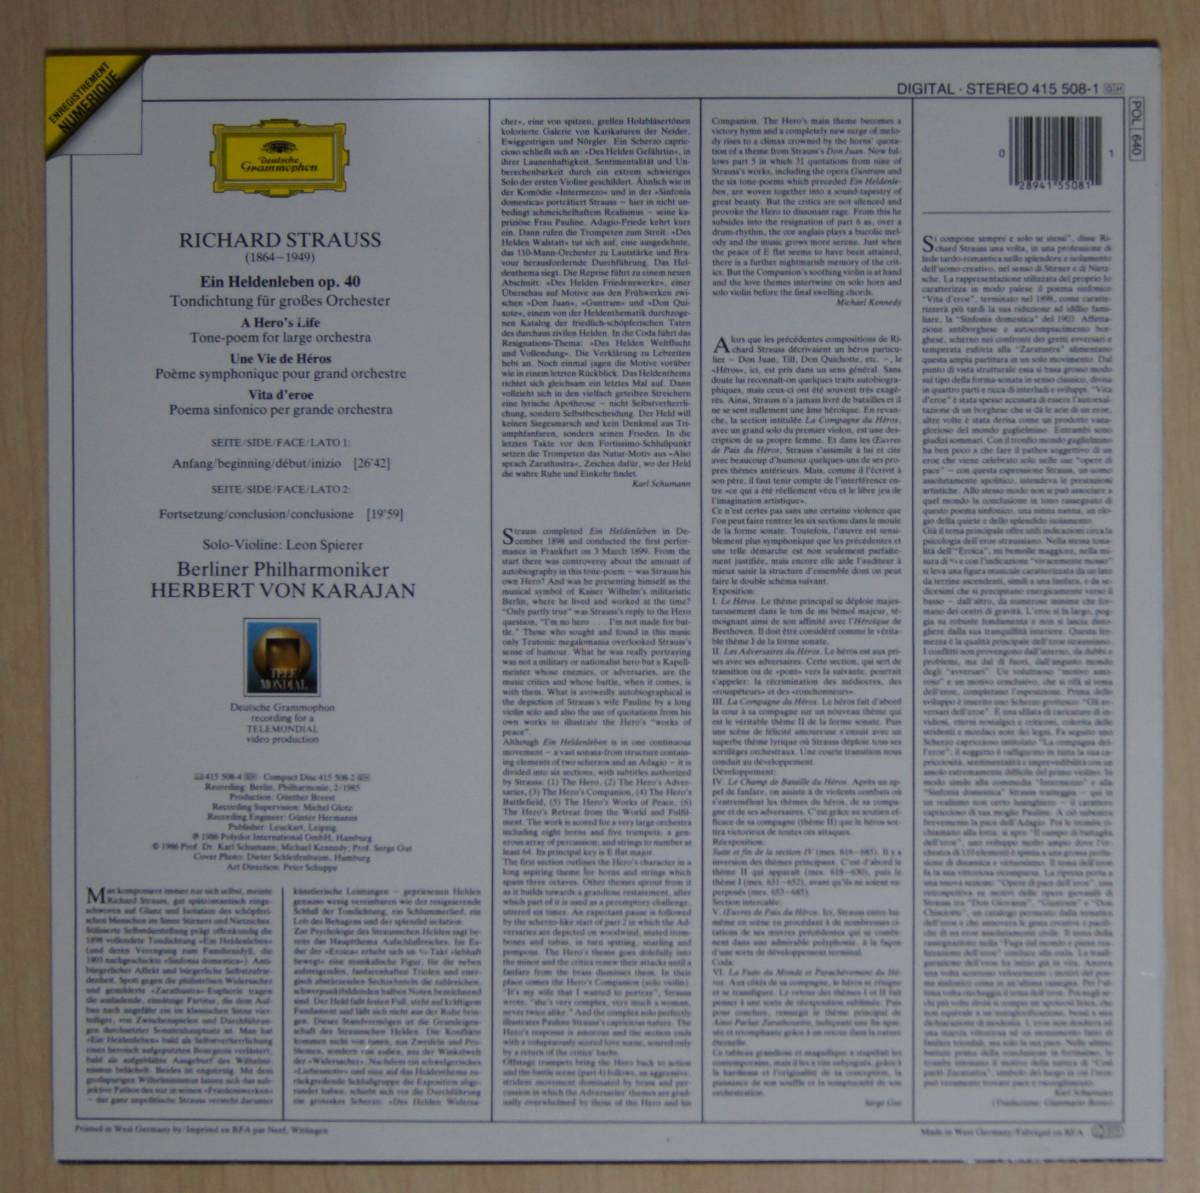  hell belt * phone *kalayan| Berlin * Phil [ Germany *glamo phone Karajan digital recording ]R.shu tiger light | reverberation poetry [ hero. raw .]